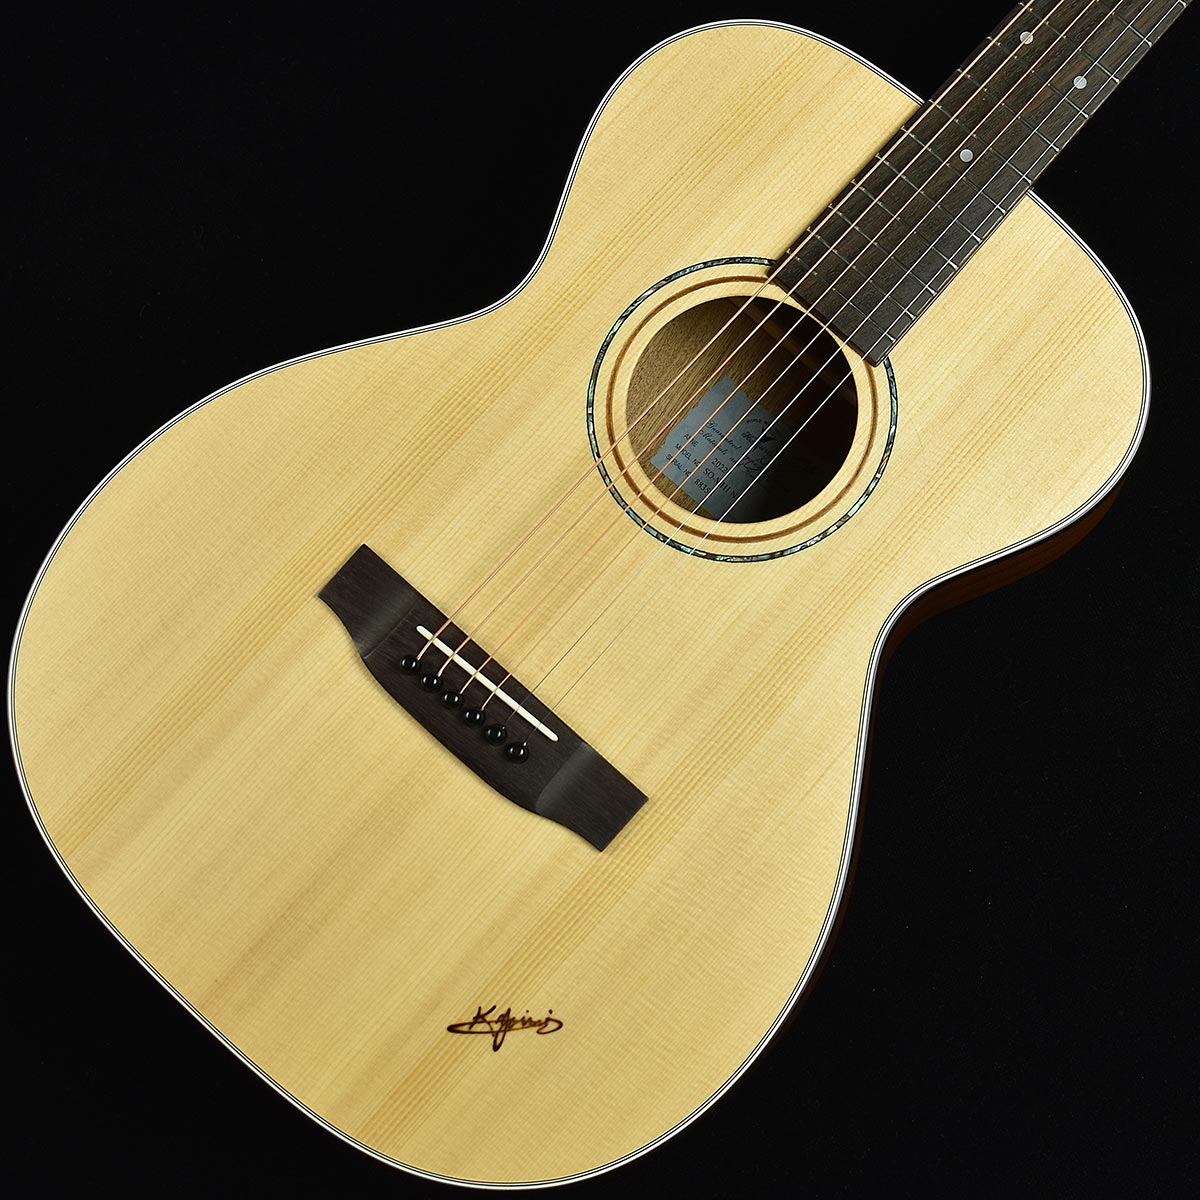 K YAIRIのアコースティックギターSO-MH1 美品です。 - ギター